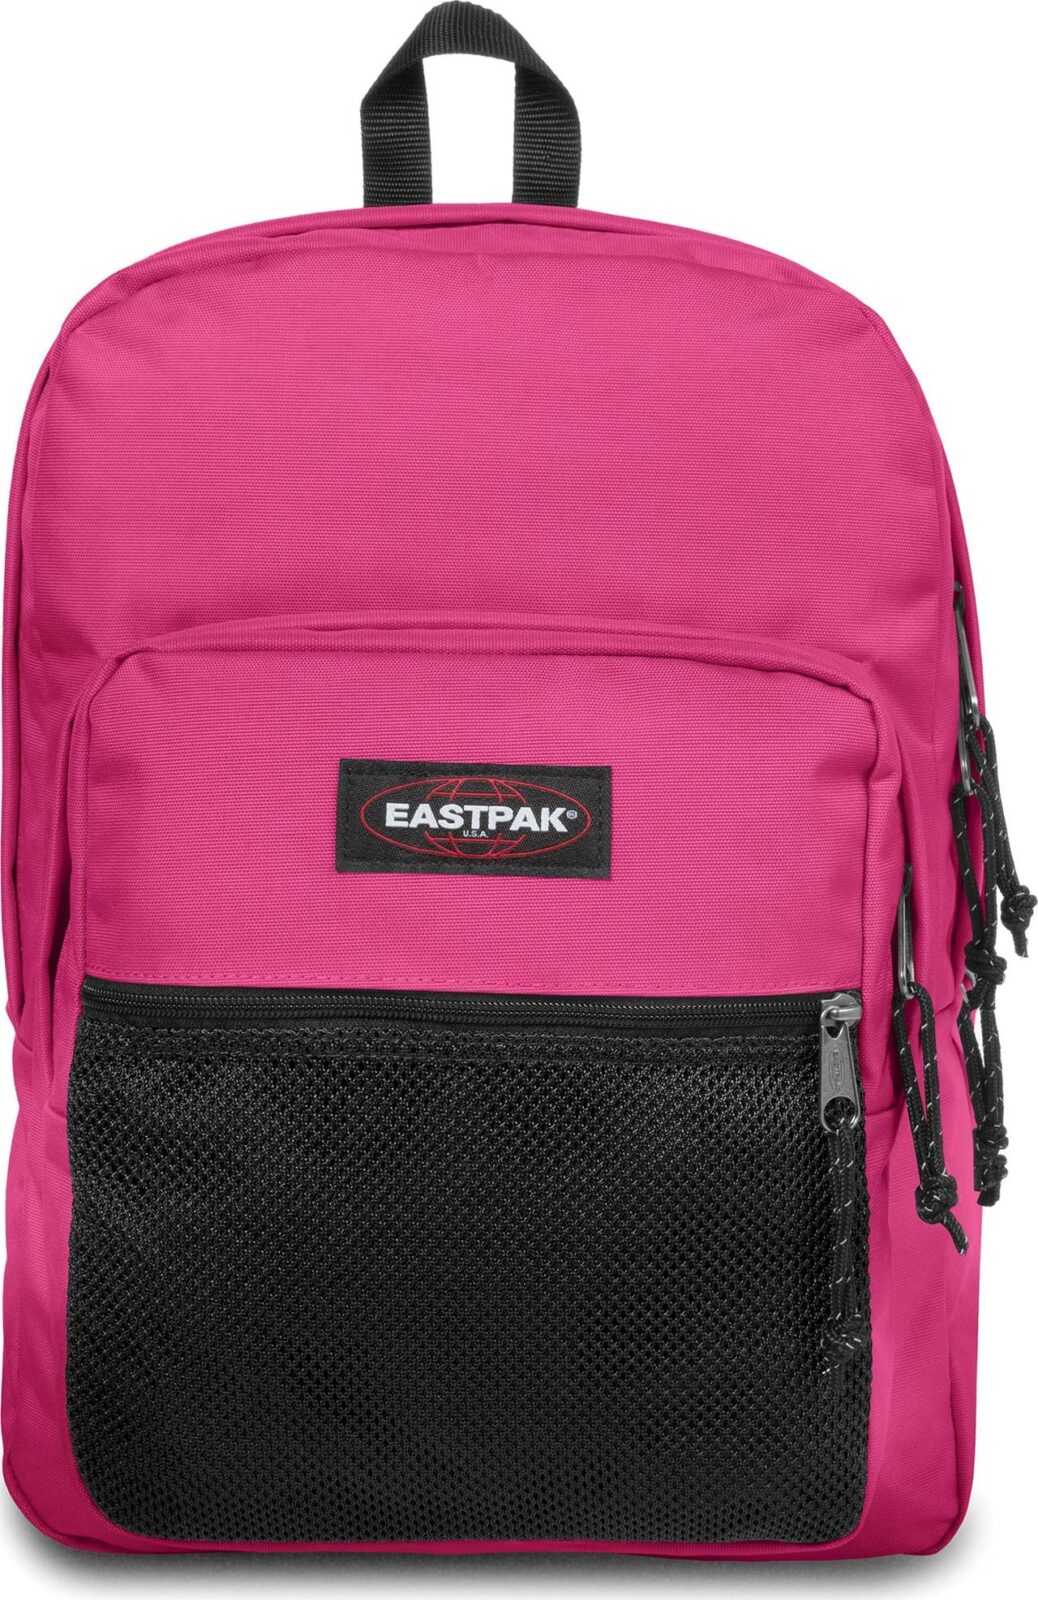 EASTPAK Batoh 'Pinnacle' černá / pink